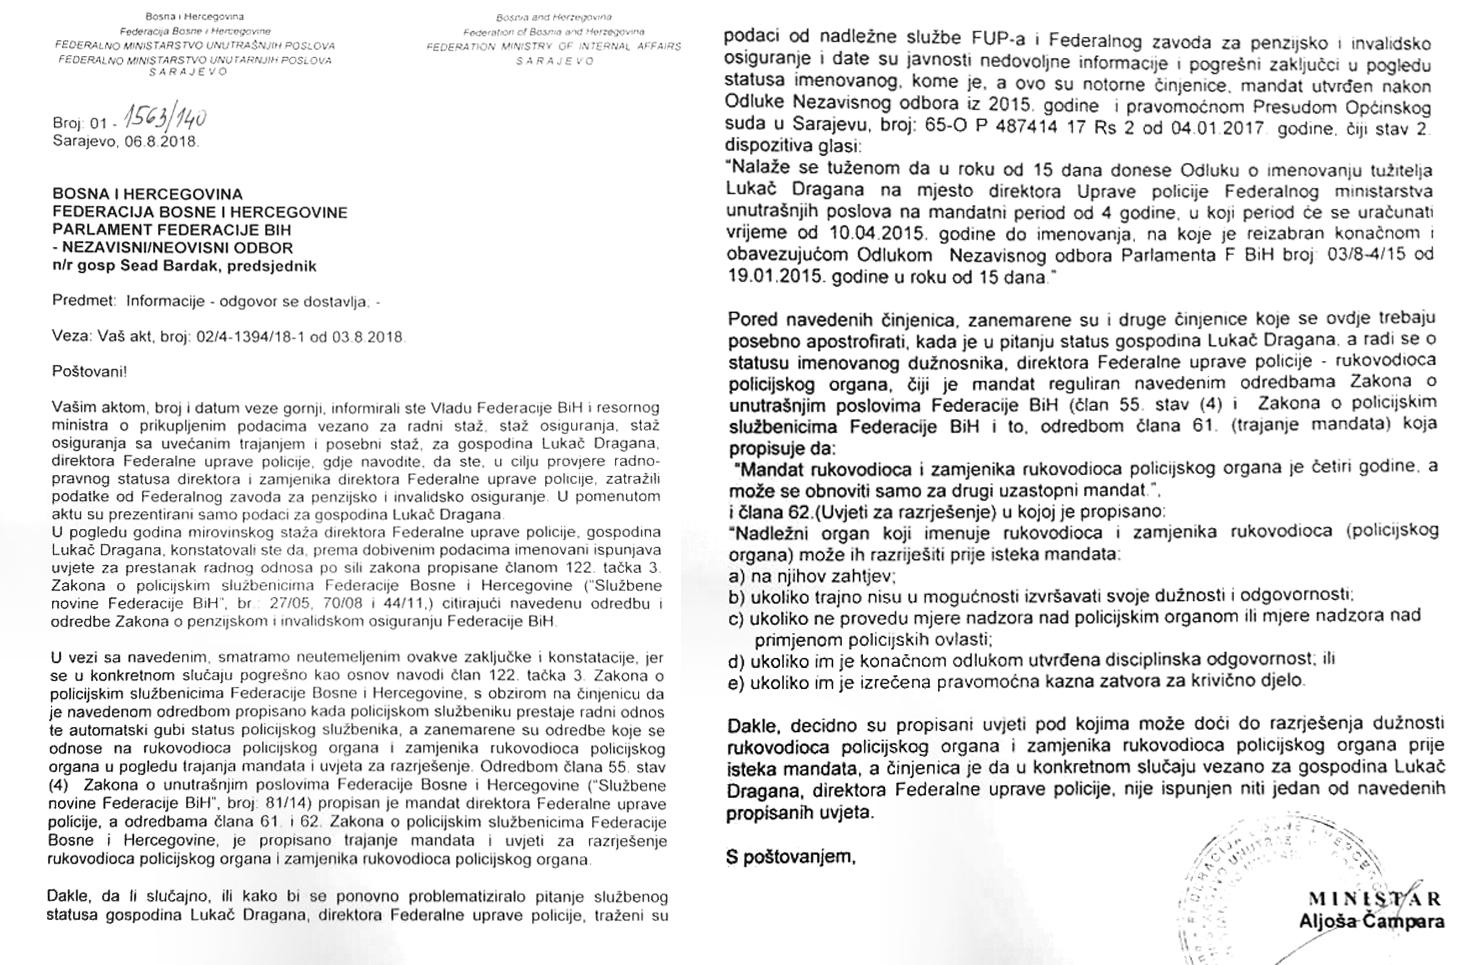 Faksimil dopisa ministra Čampare upućenog Vladi i NO - Avaz